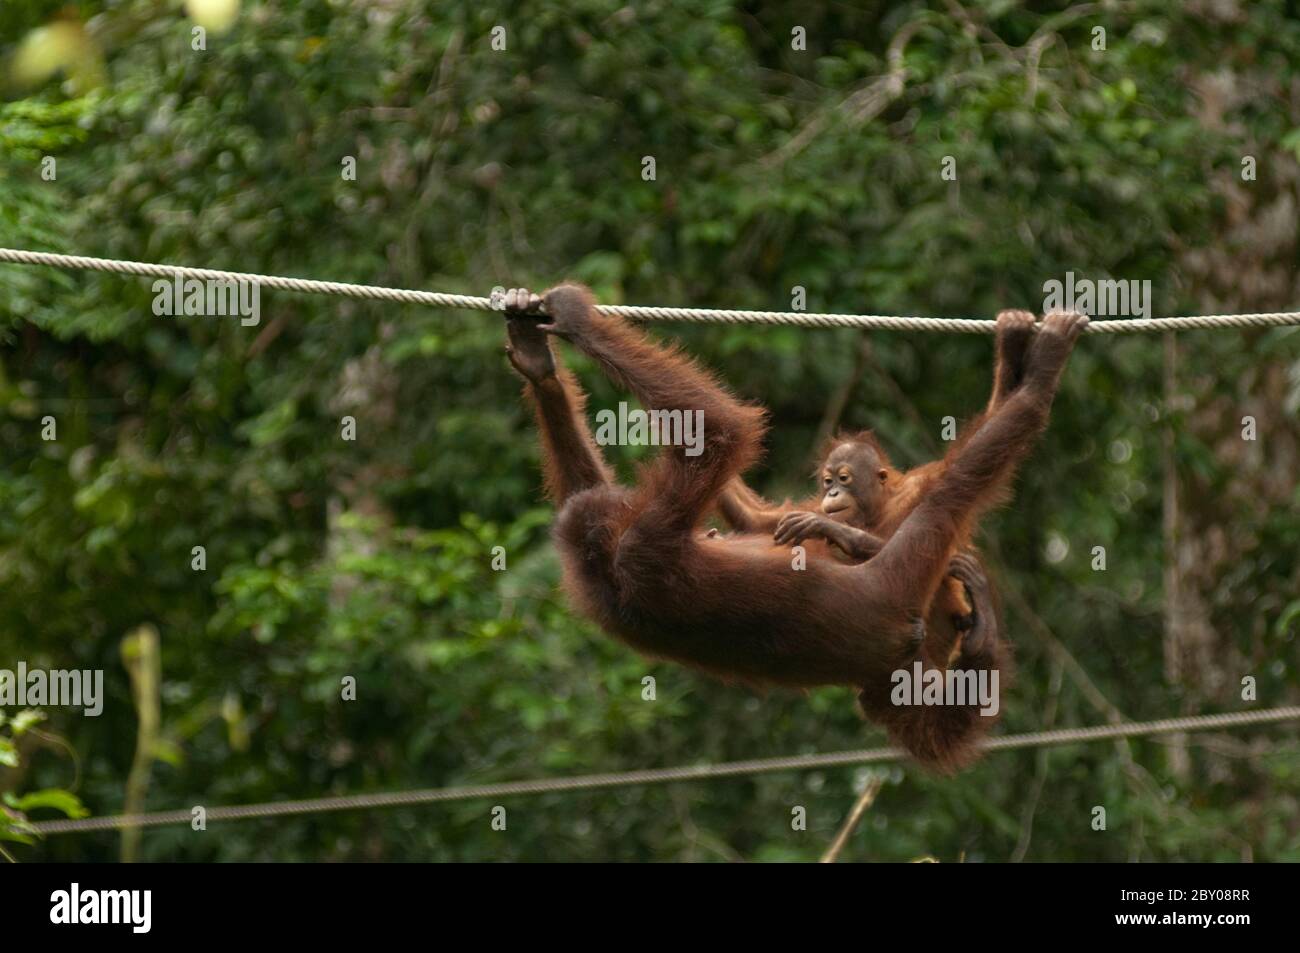 Orangutan, Pongo pygmaeus, with baby on rope, Sepilok Orangutan Rehabilitation Centre, Sandakan, Sabah, Borneo, Malaysia Stock Photo